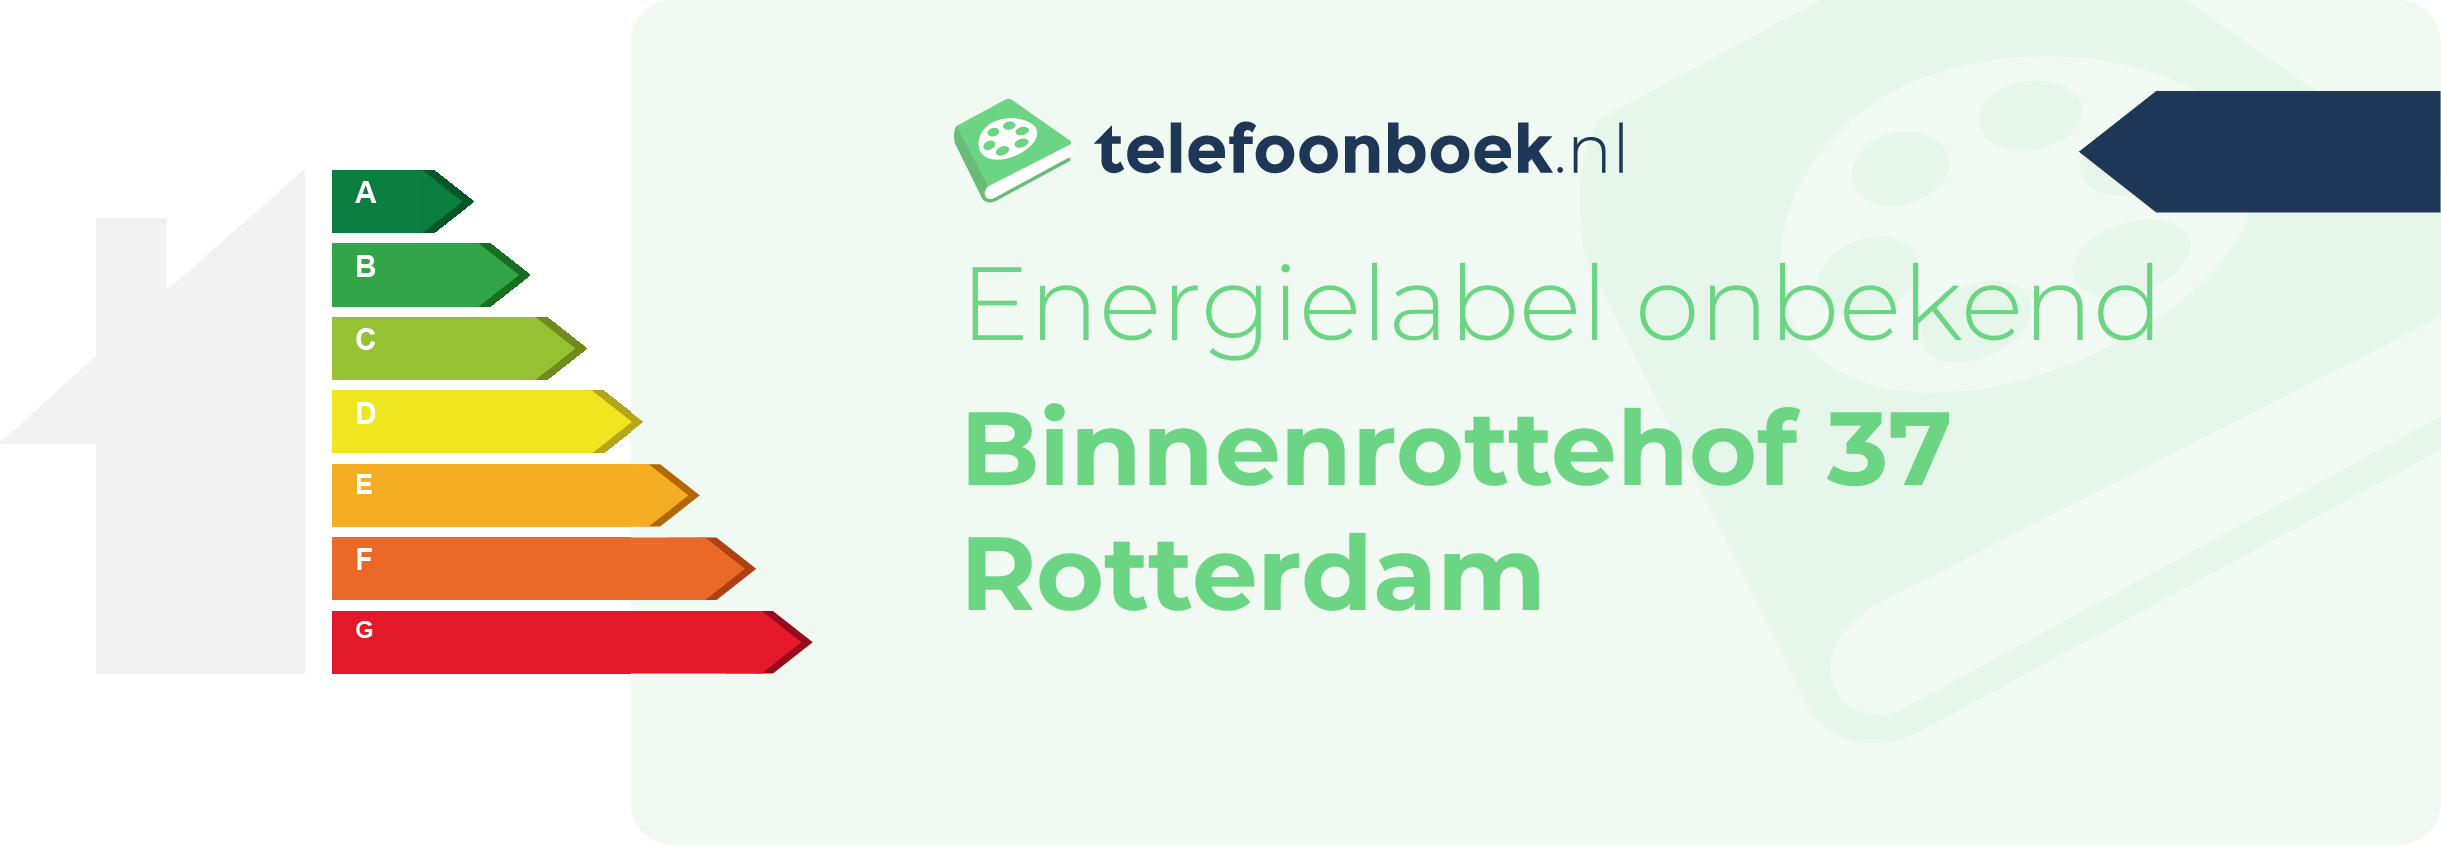 Energielabel Binnenrottehof 37 Rotterdam